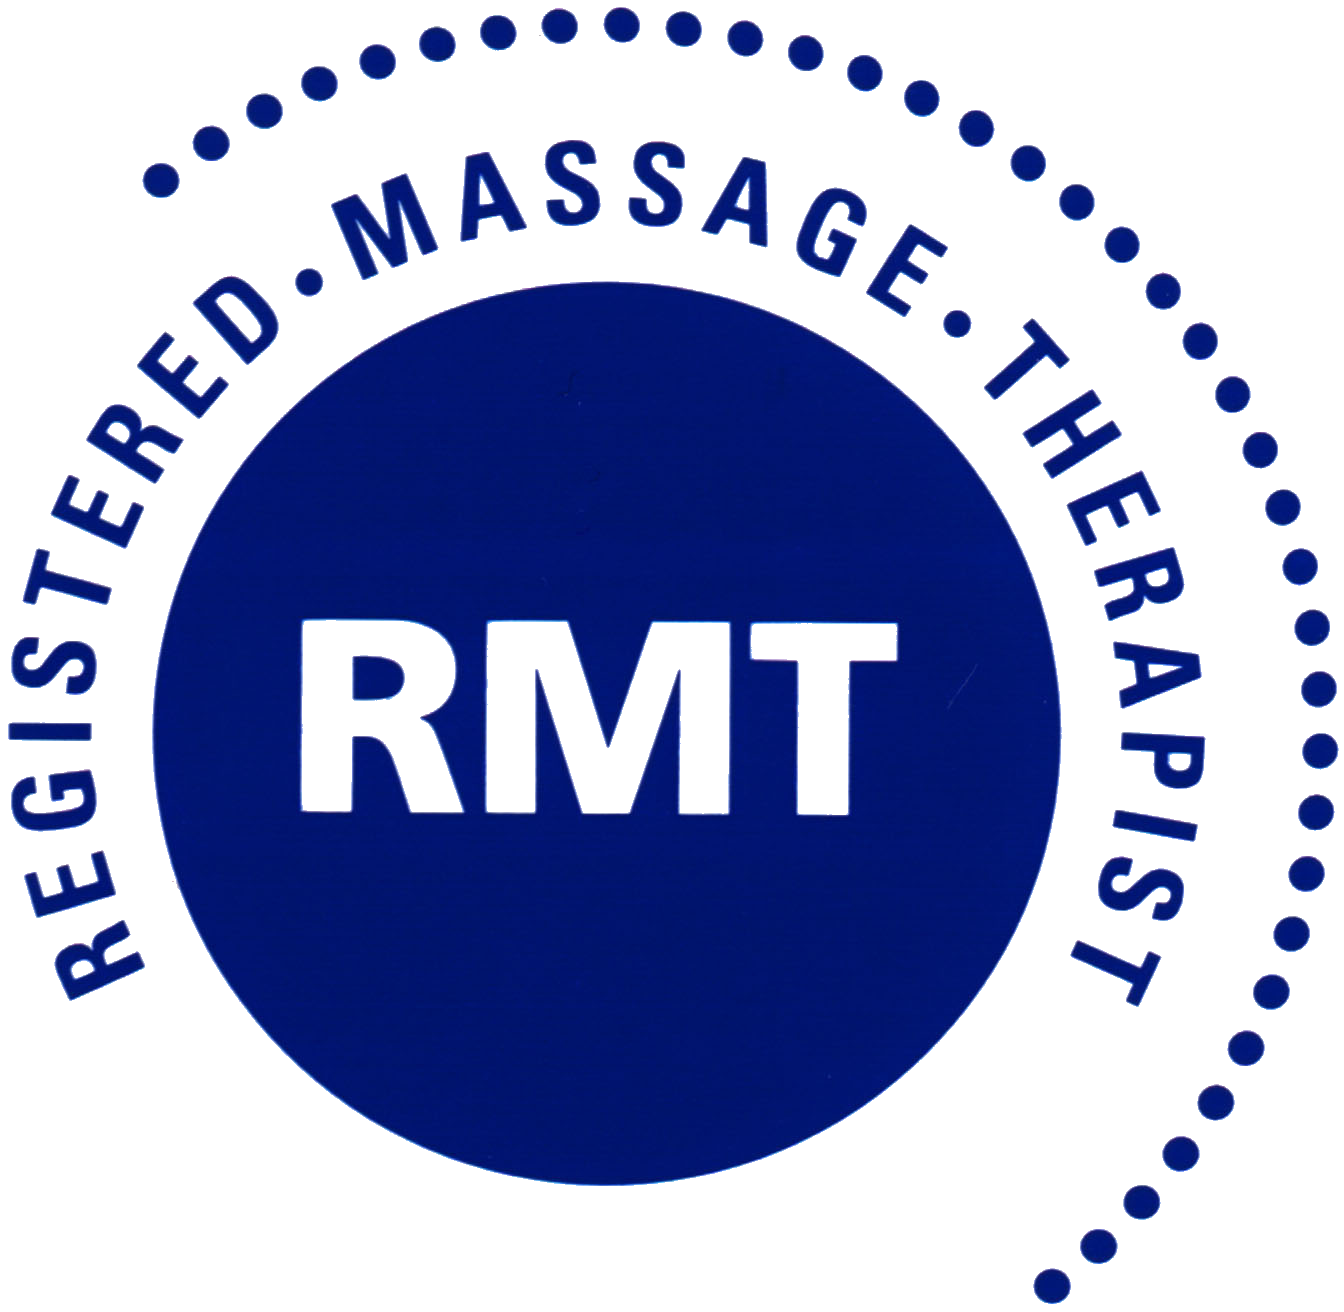 Massage Therapists' Association of British Columbia